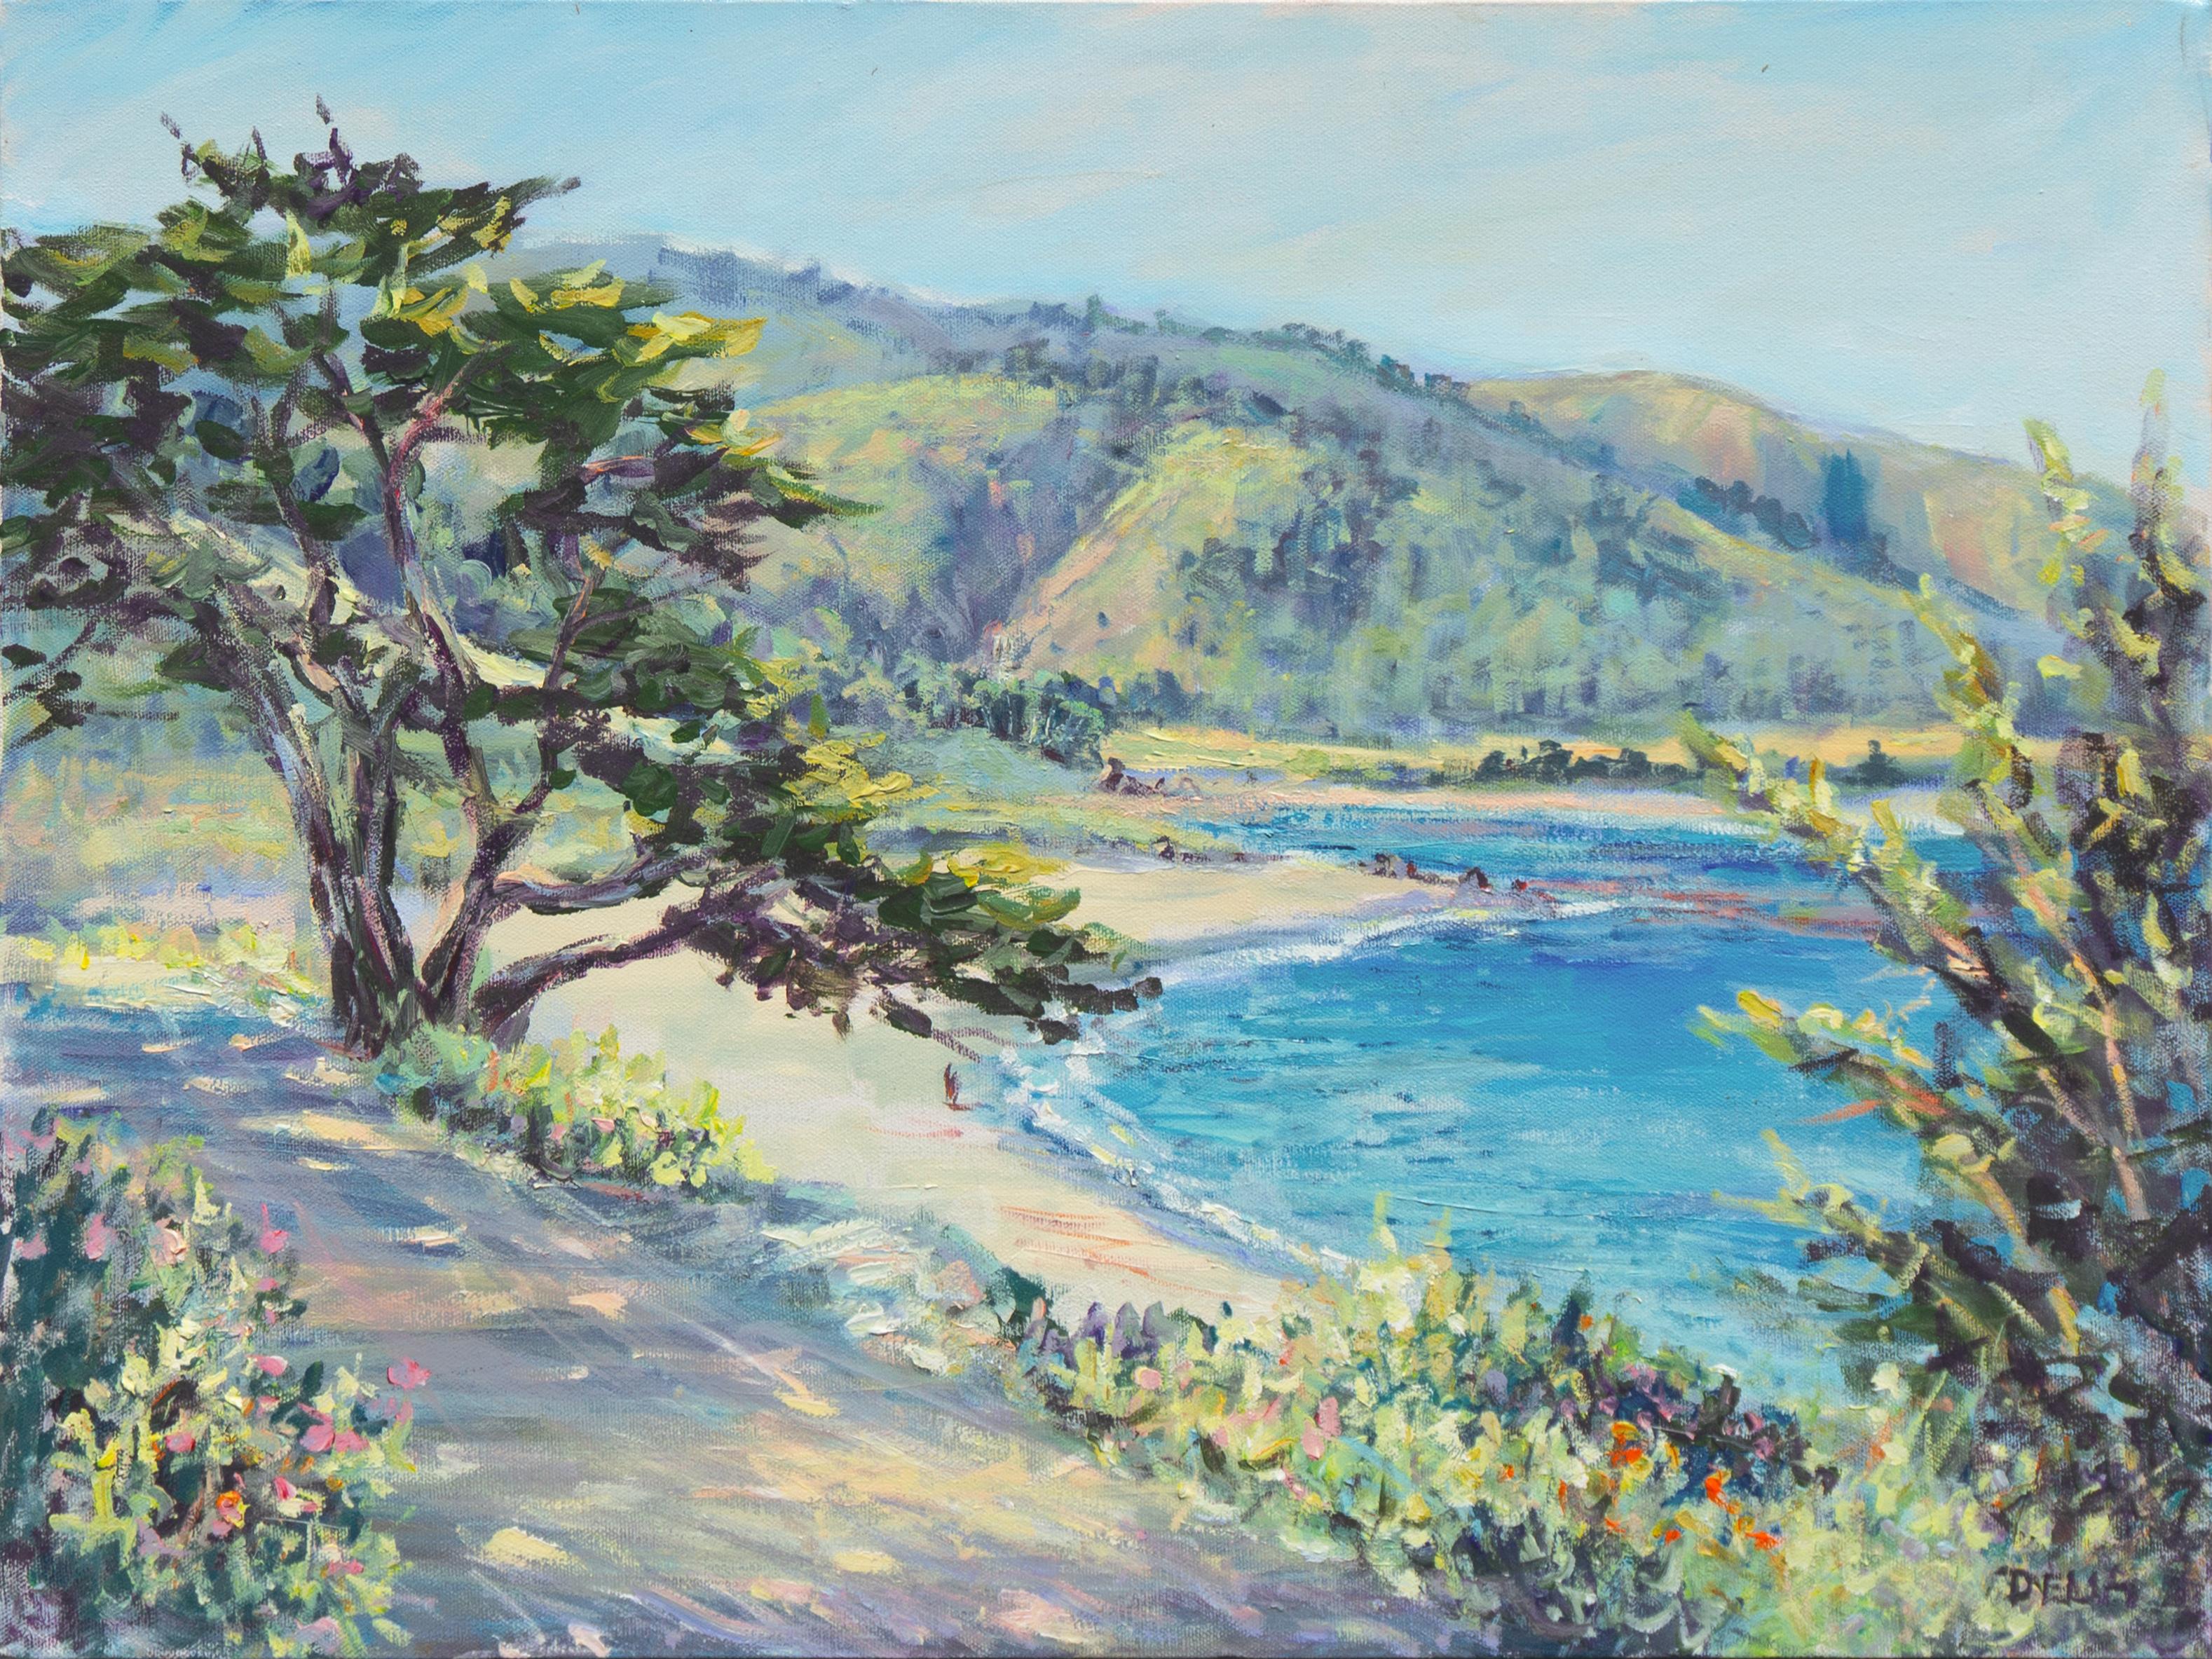 Delia Bradford Landscape Painting - 'Monterey Coastline', Carmel, Big Sur, Pacific Ocean, California Impressionist